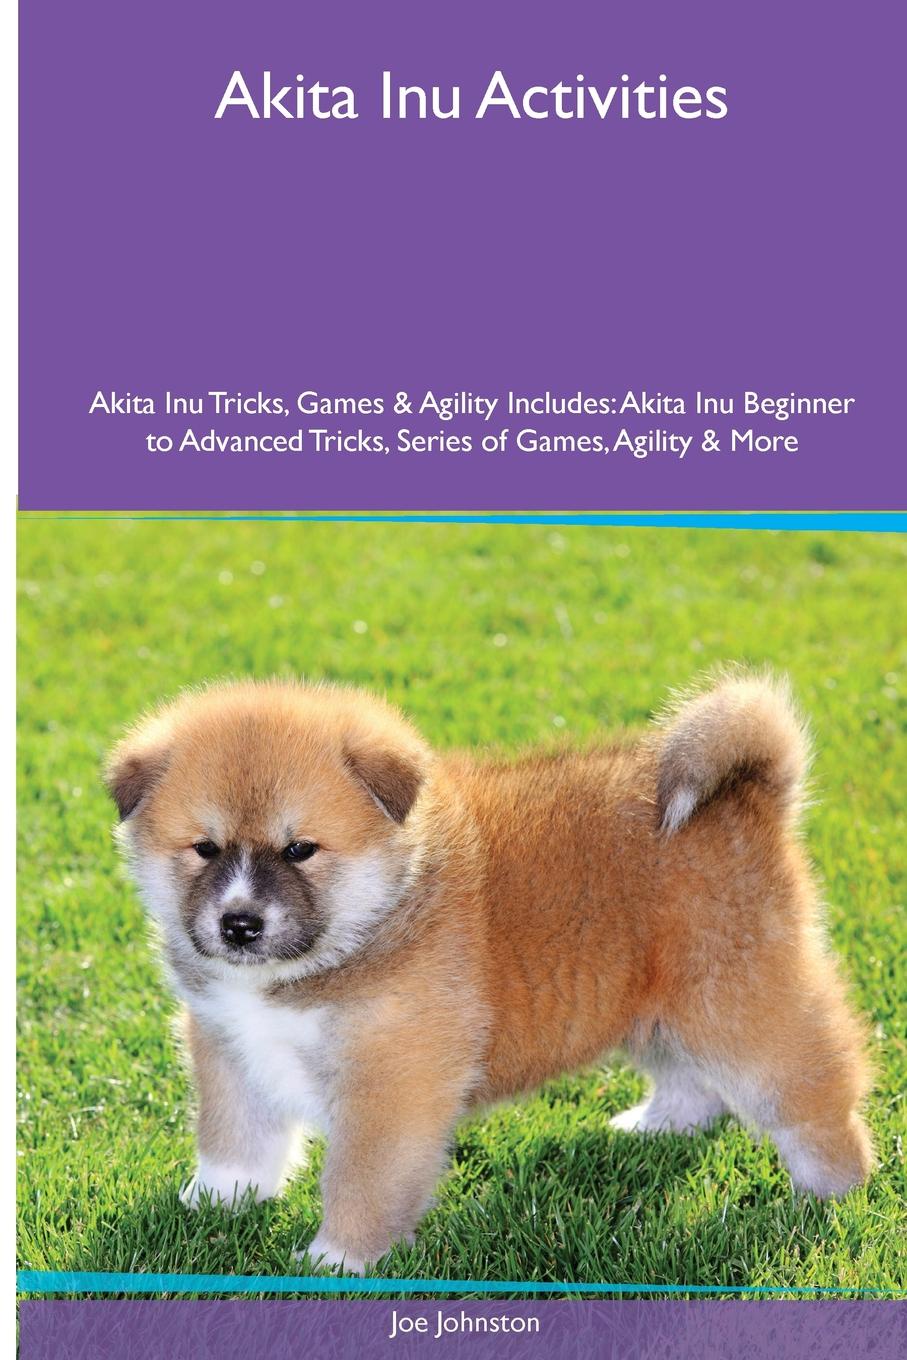 Akita Inu  Activities Akita Inu Tricks, Games & Agility. Includes. Akita Inu Beginner to Advanced Tricks, Series of Games, Agility and More